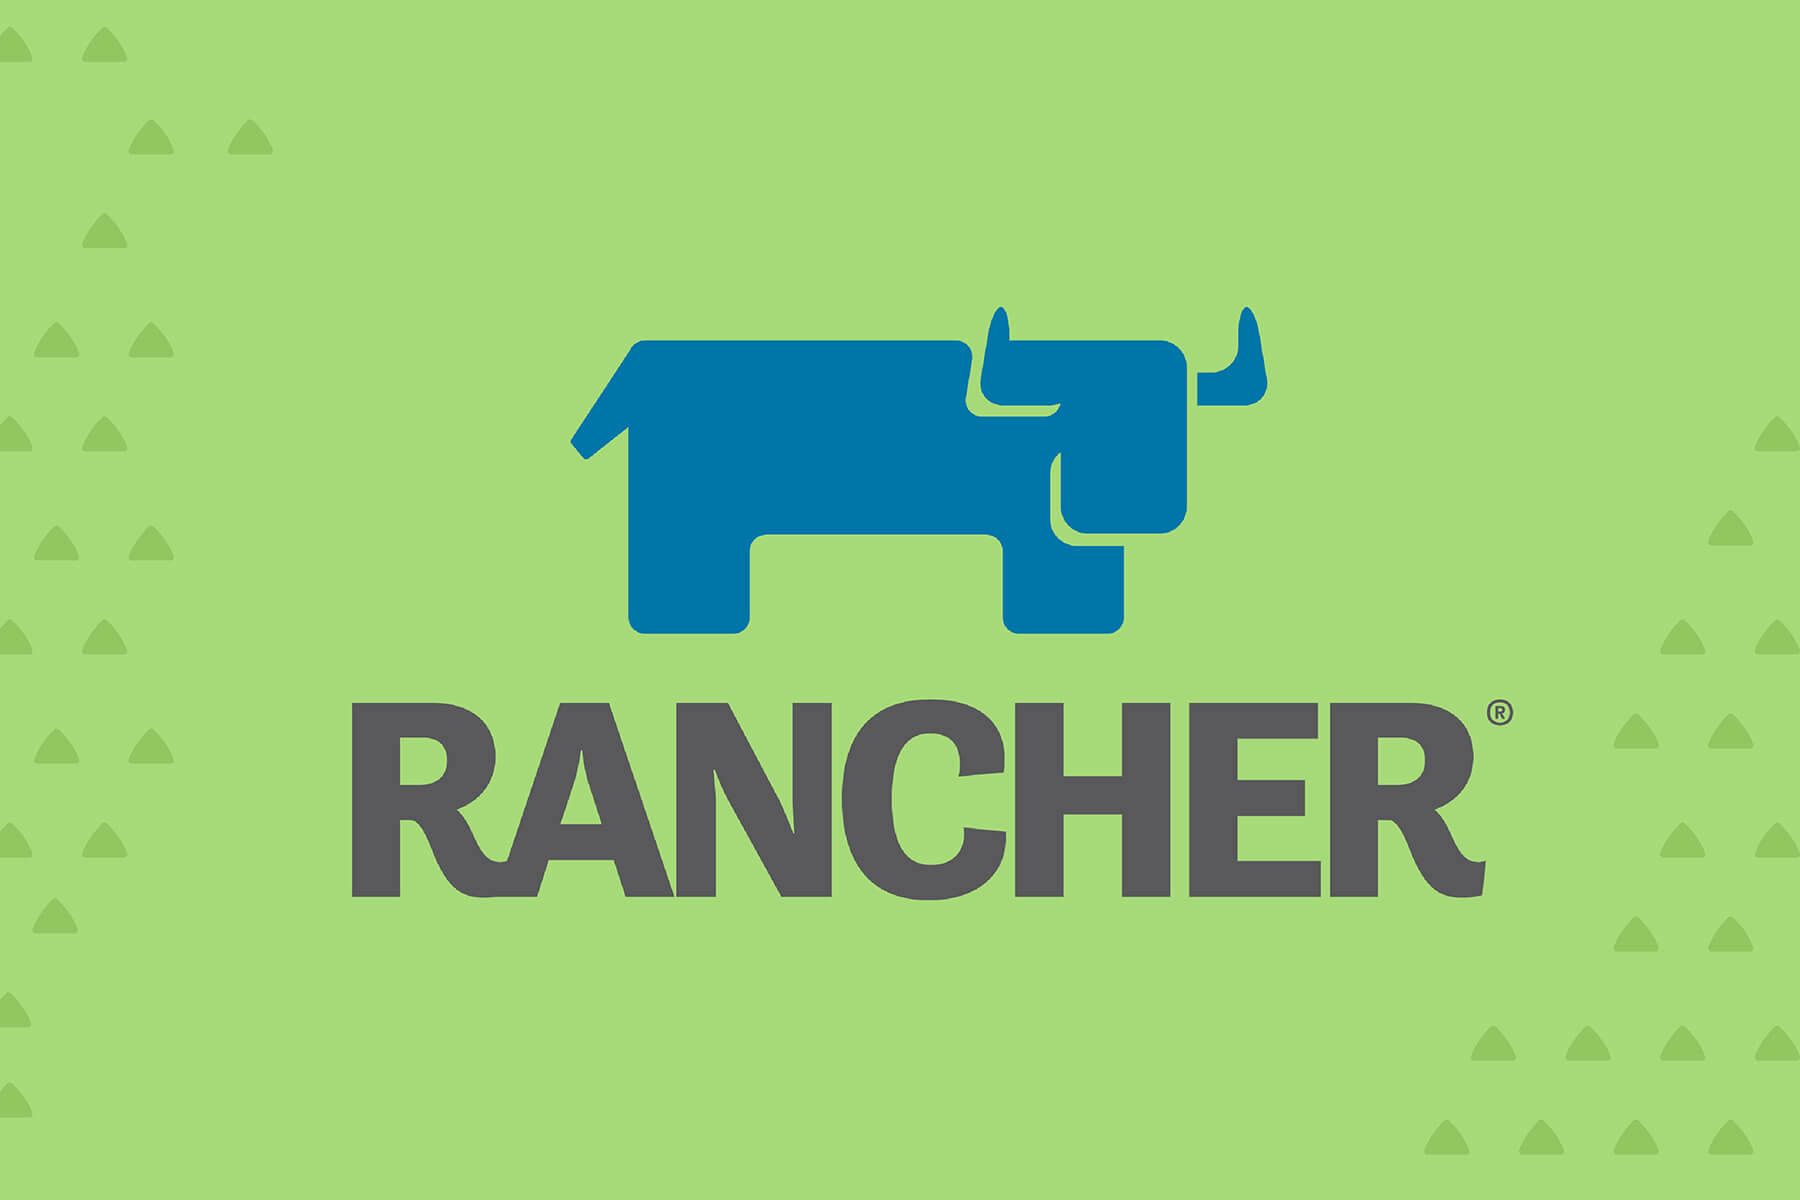 Rancher 2.3 Brings Kubernetes Benefits to Microsoft Windows Applications